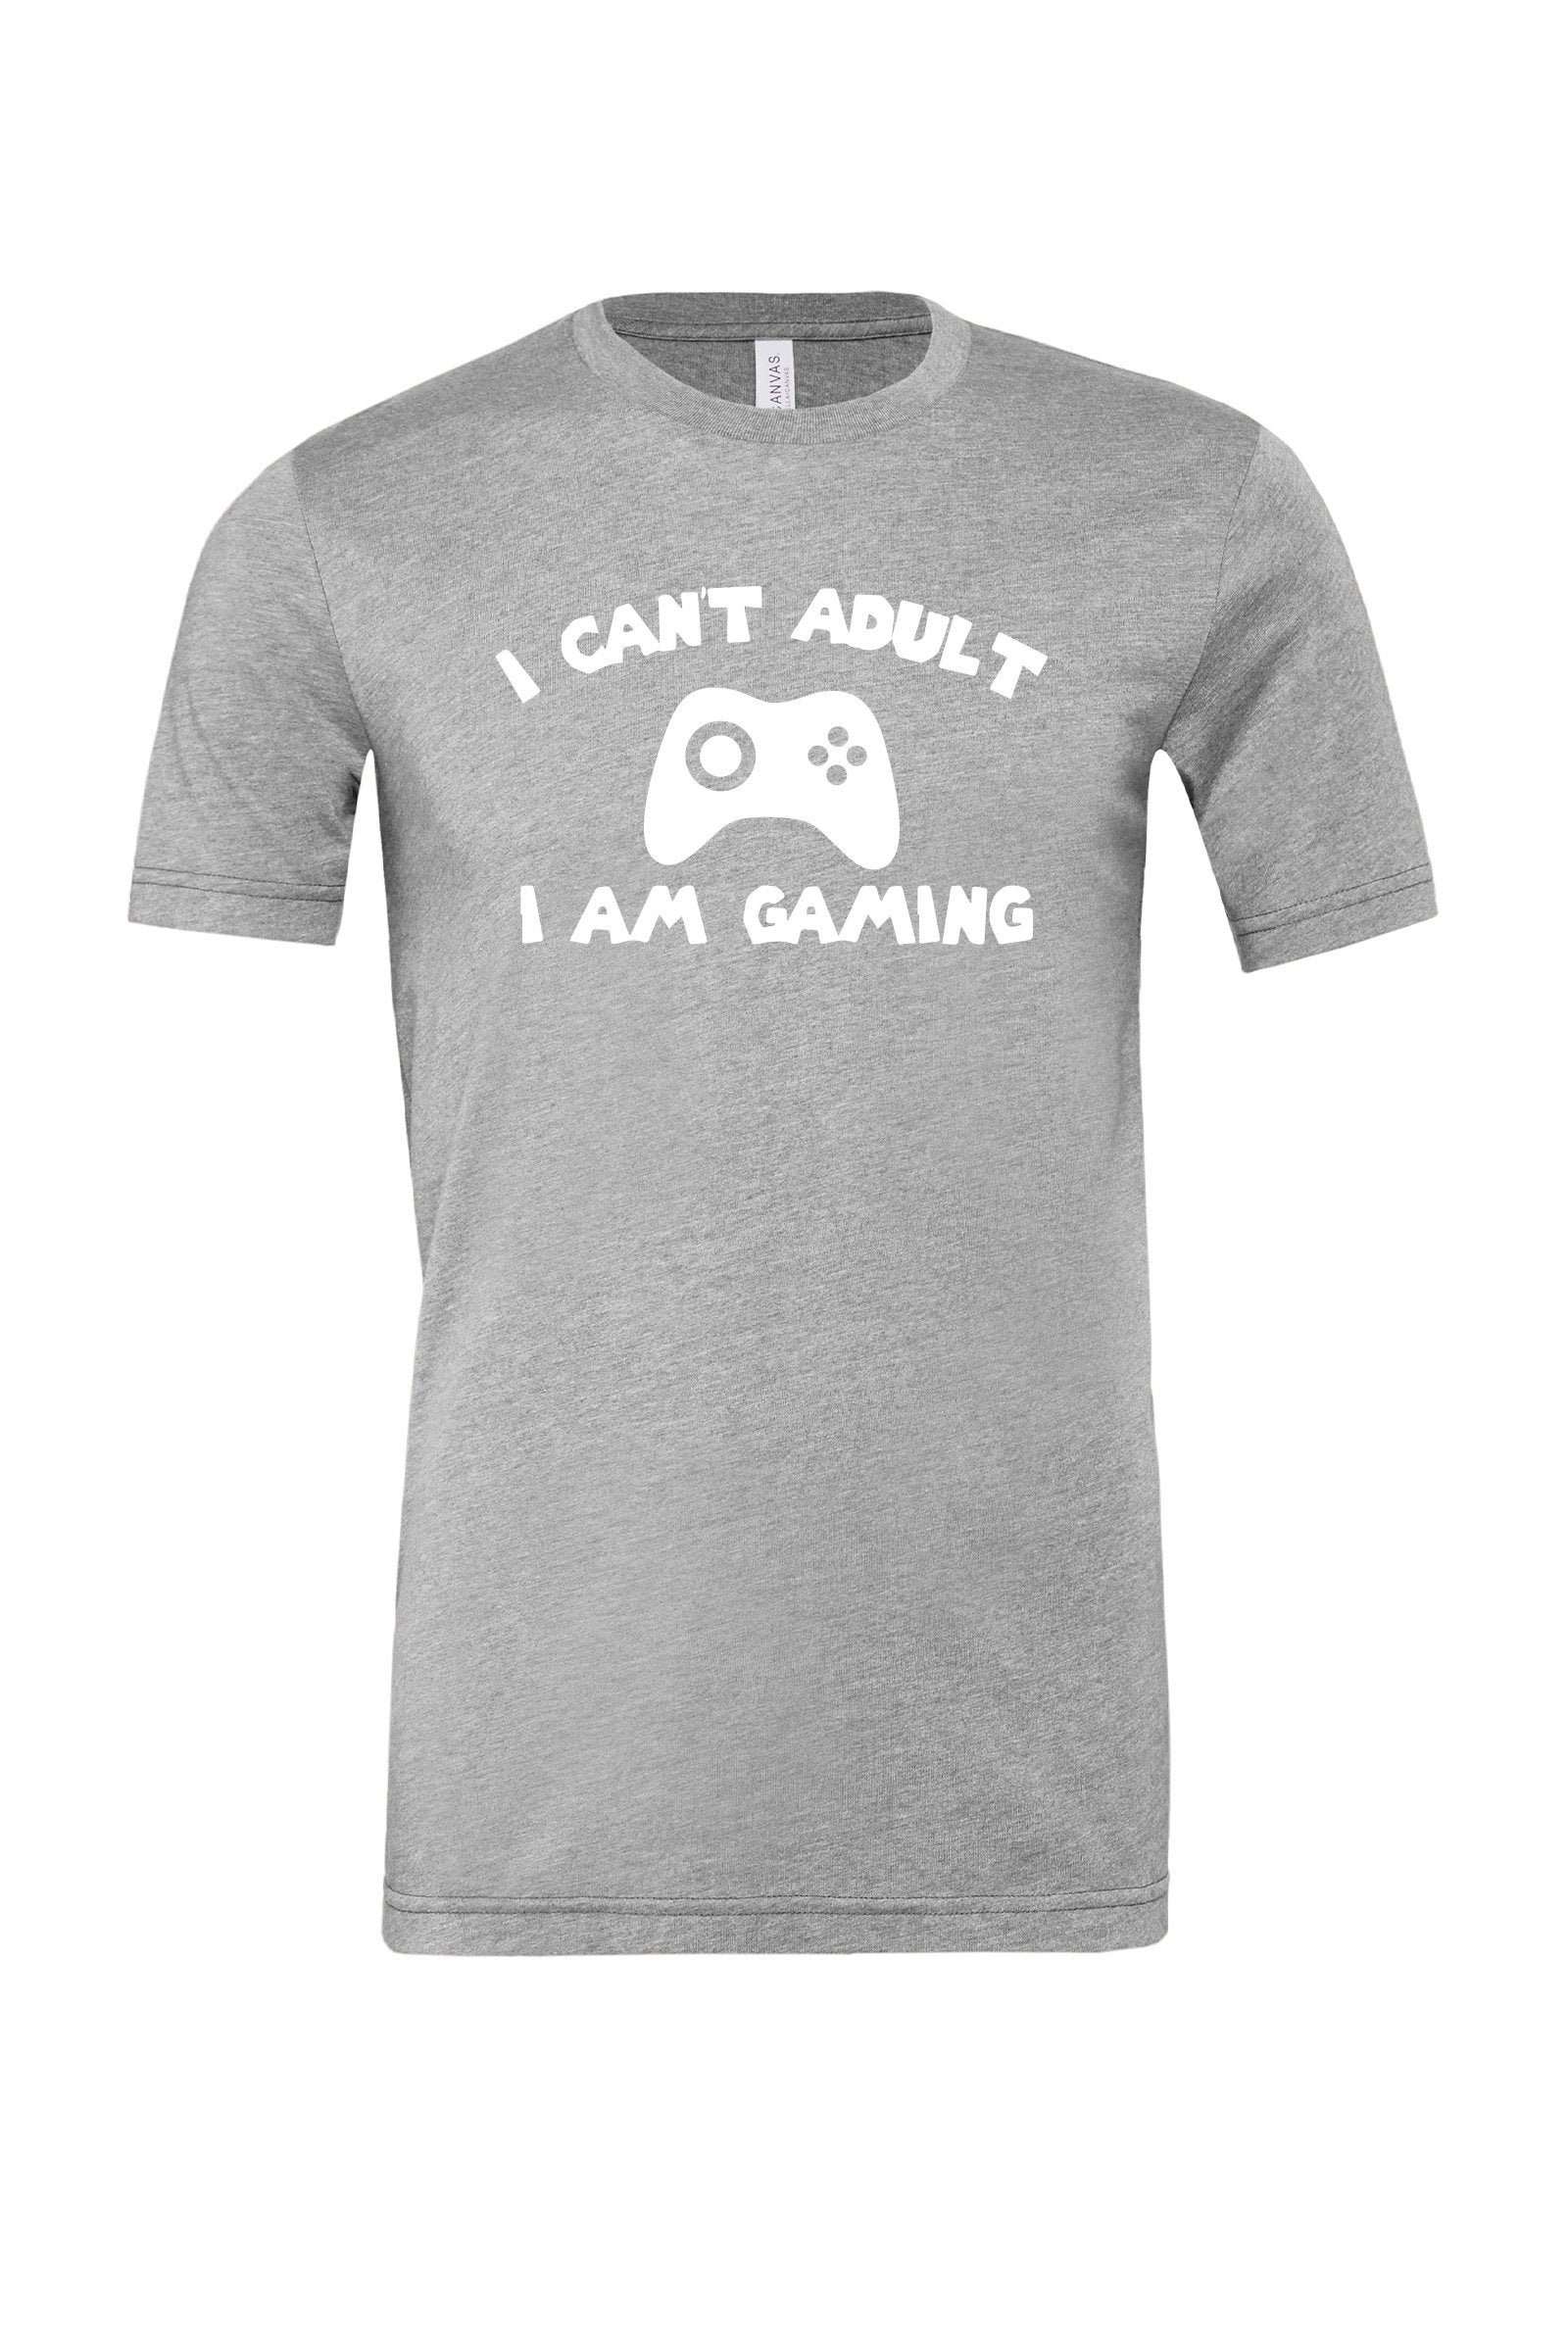 gaming t shirt